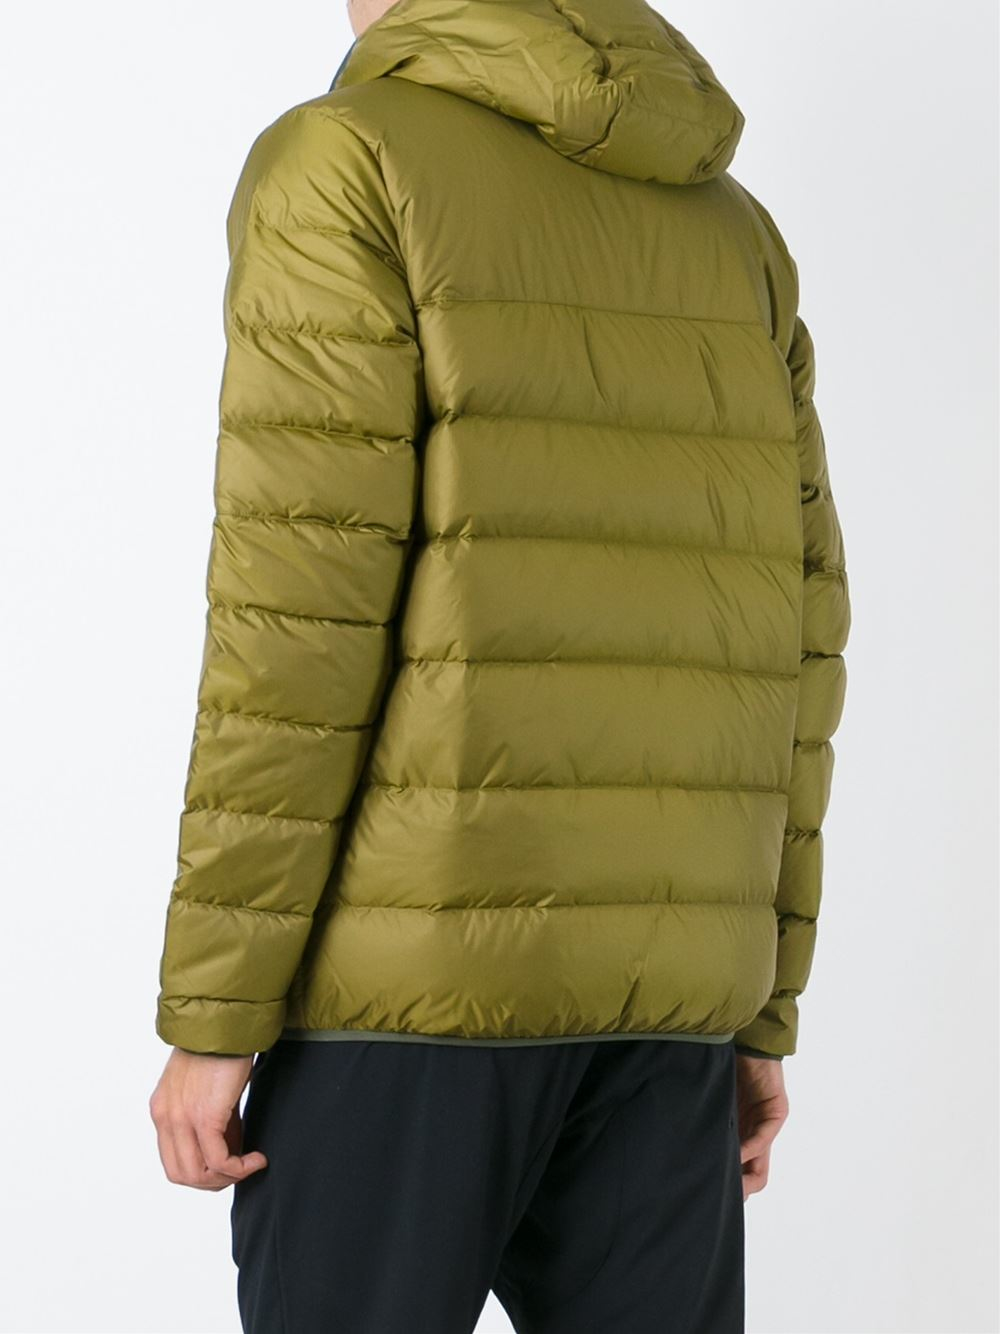 Nike 'alliance 550' Padded Jacket in Green for Men - Lyst